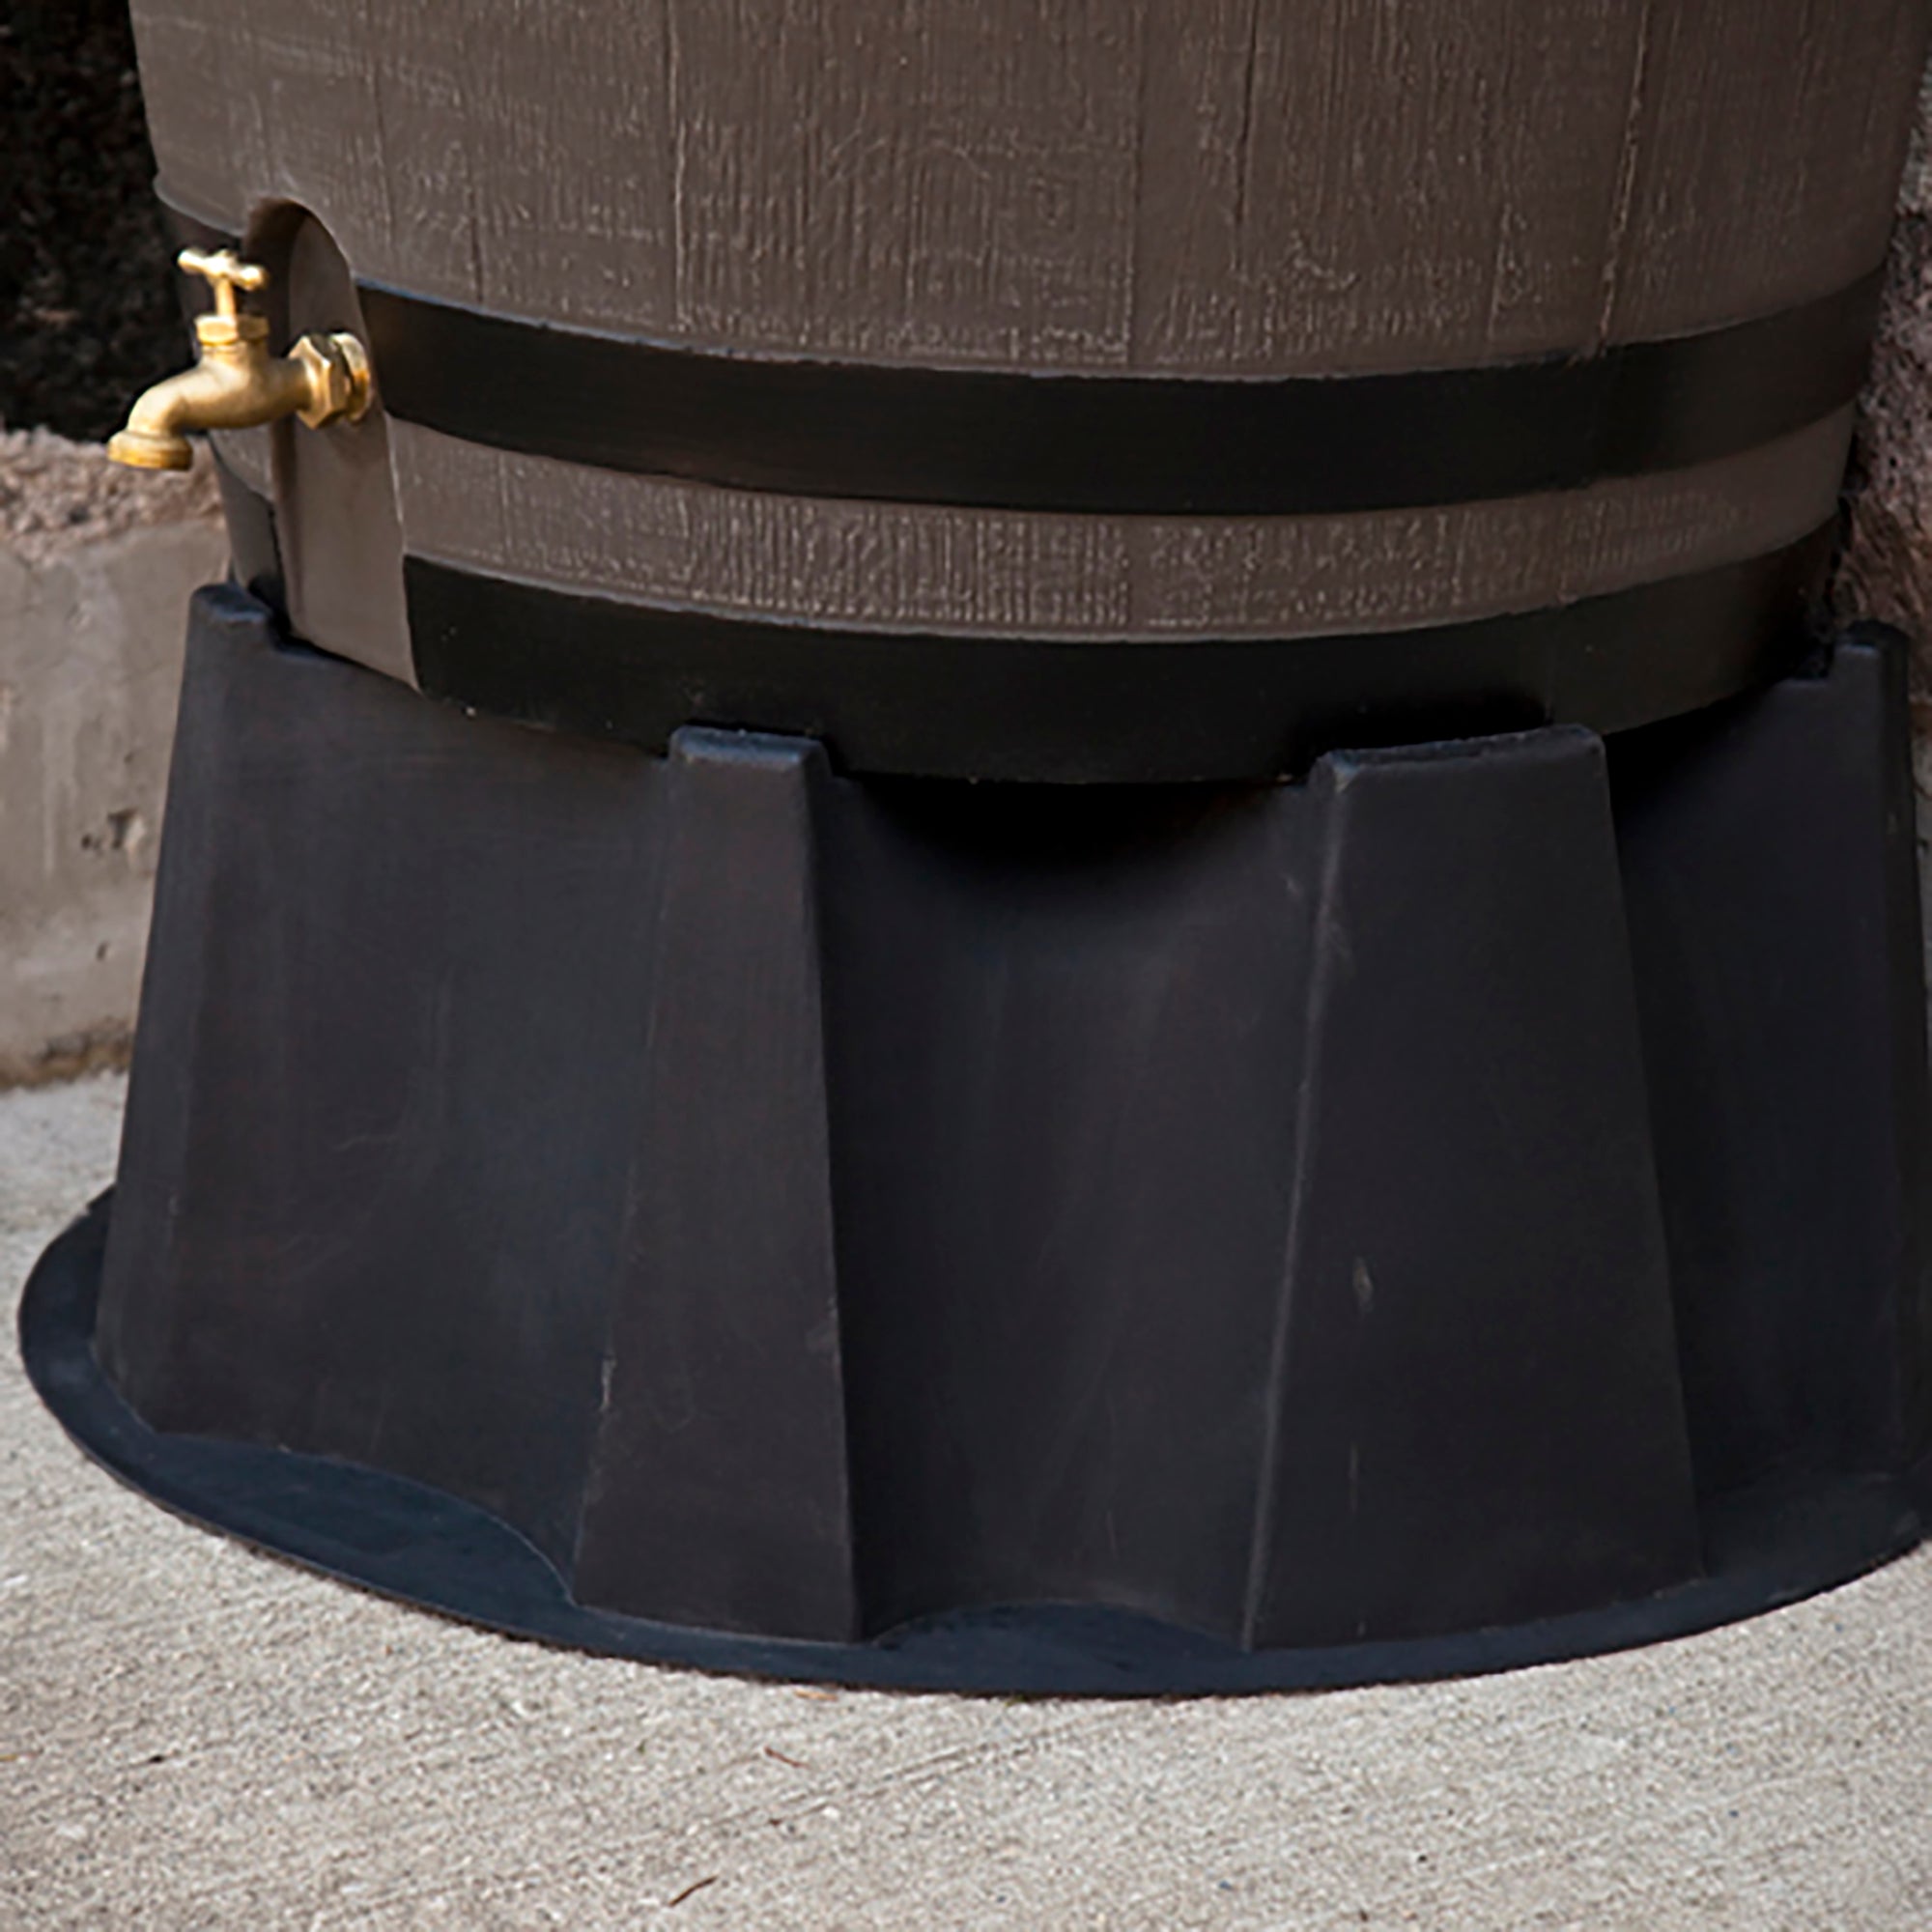 Black rain barrel stand under rain barrel on stone background